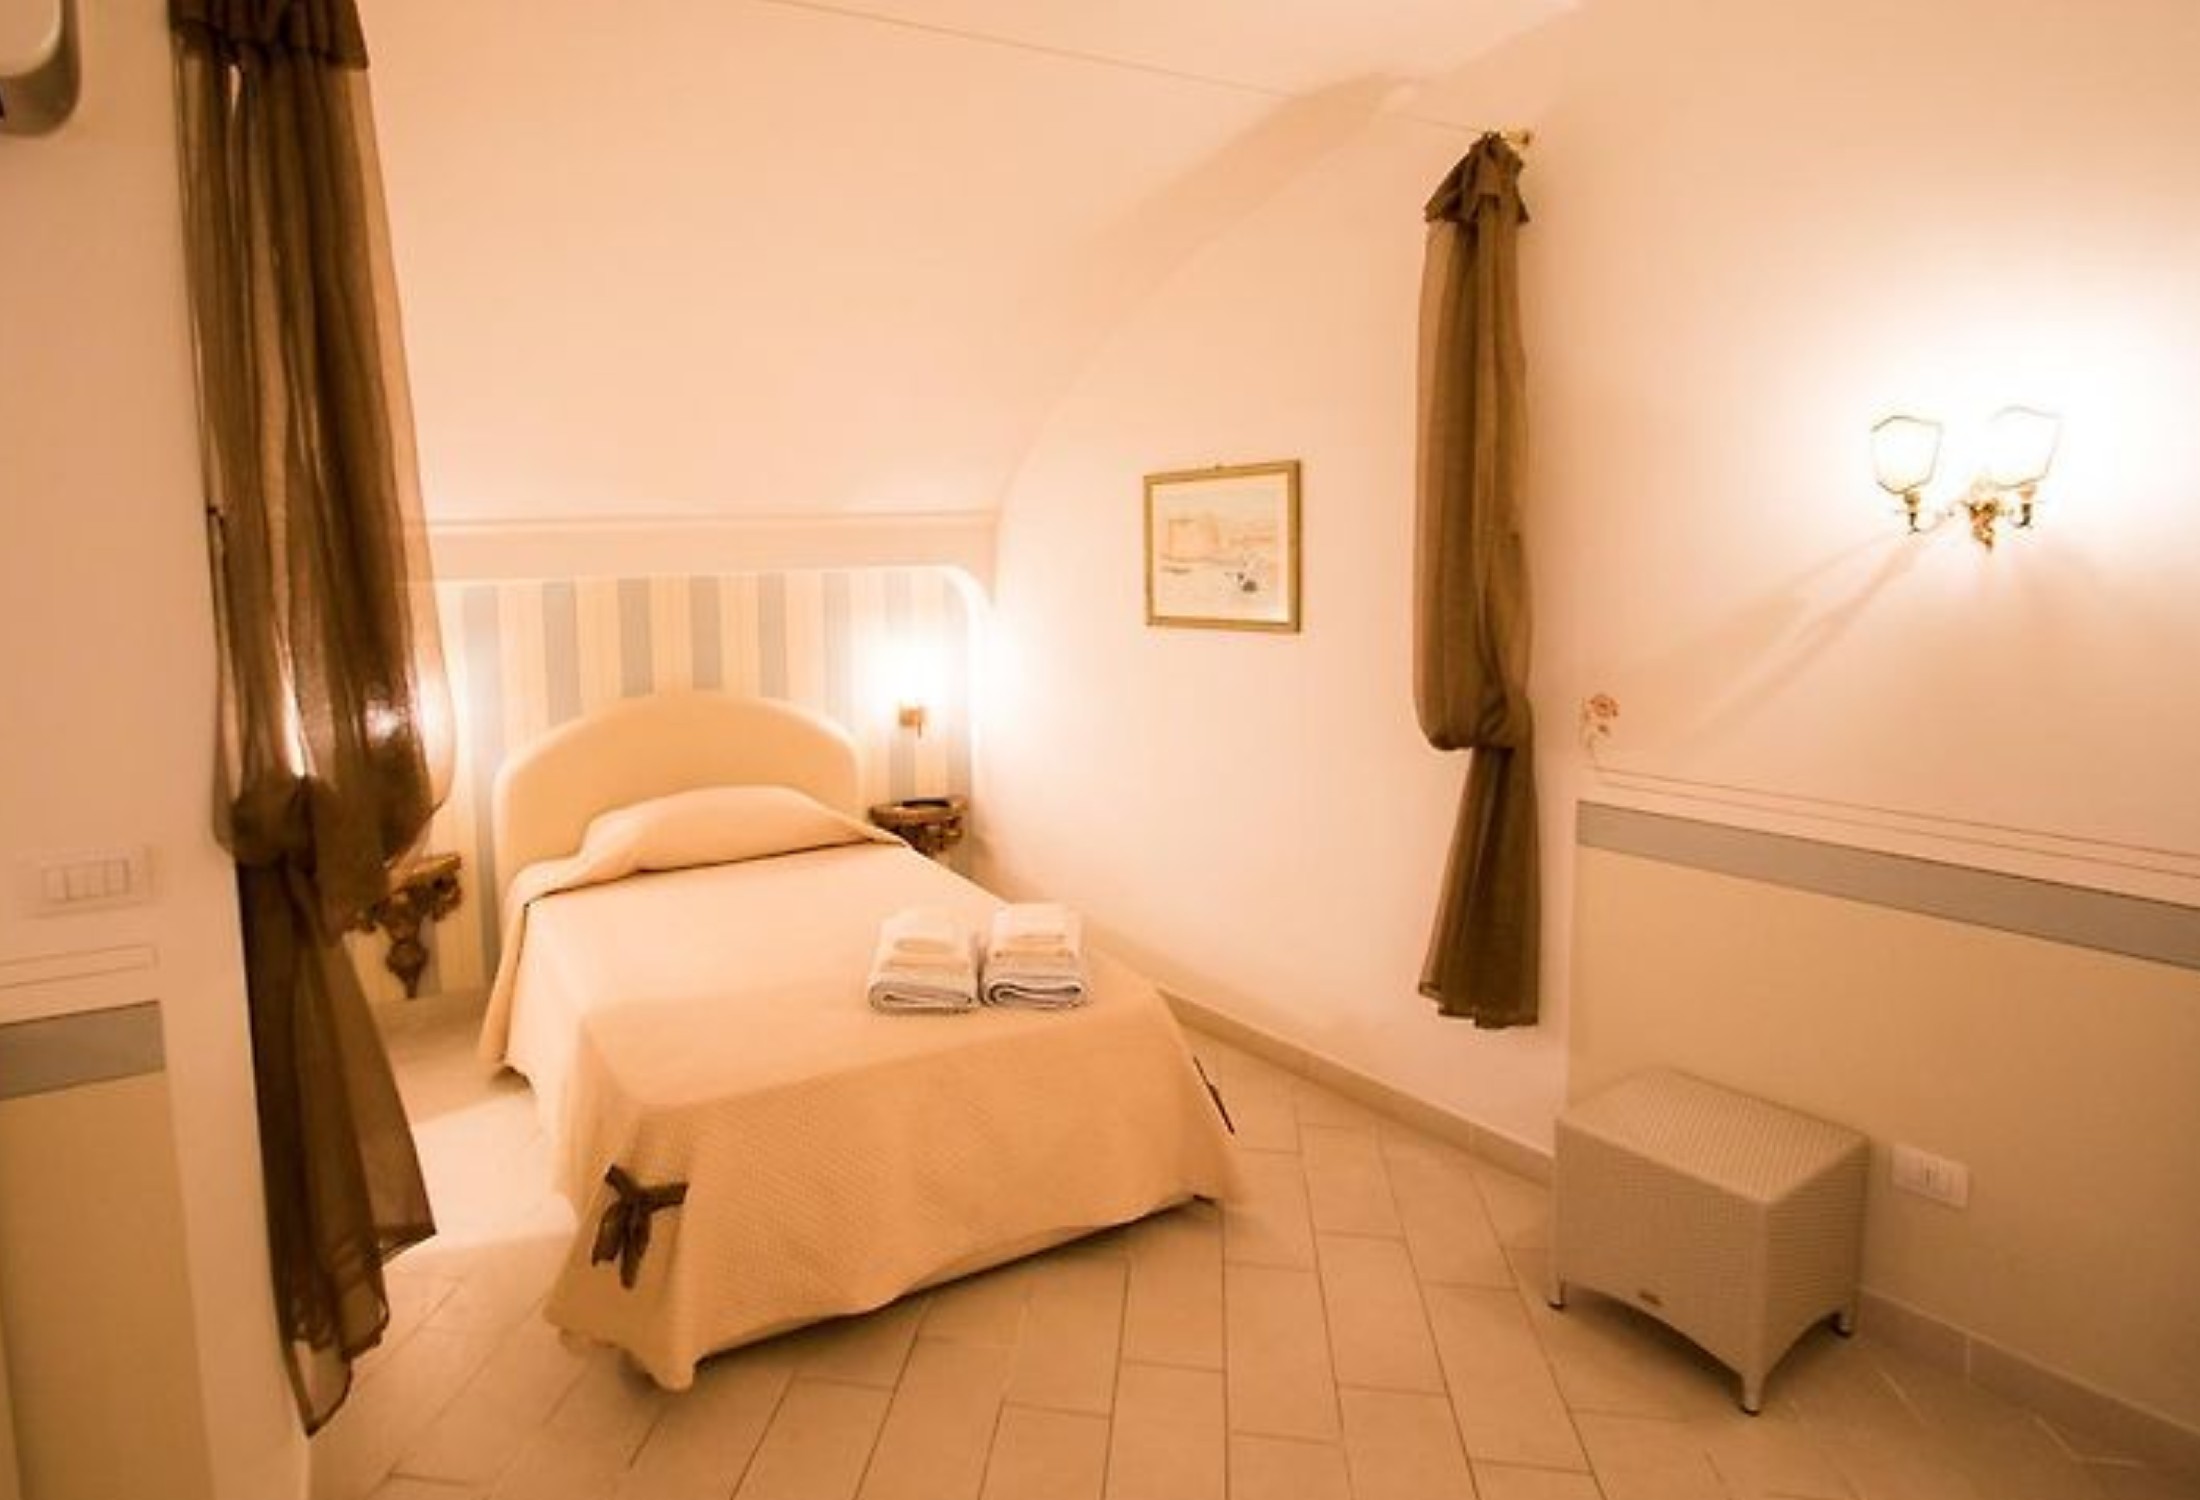 DIAMANTE-luxury rooms standard (17)